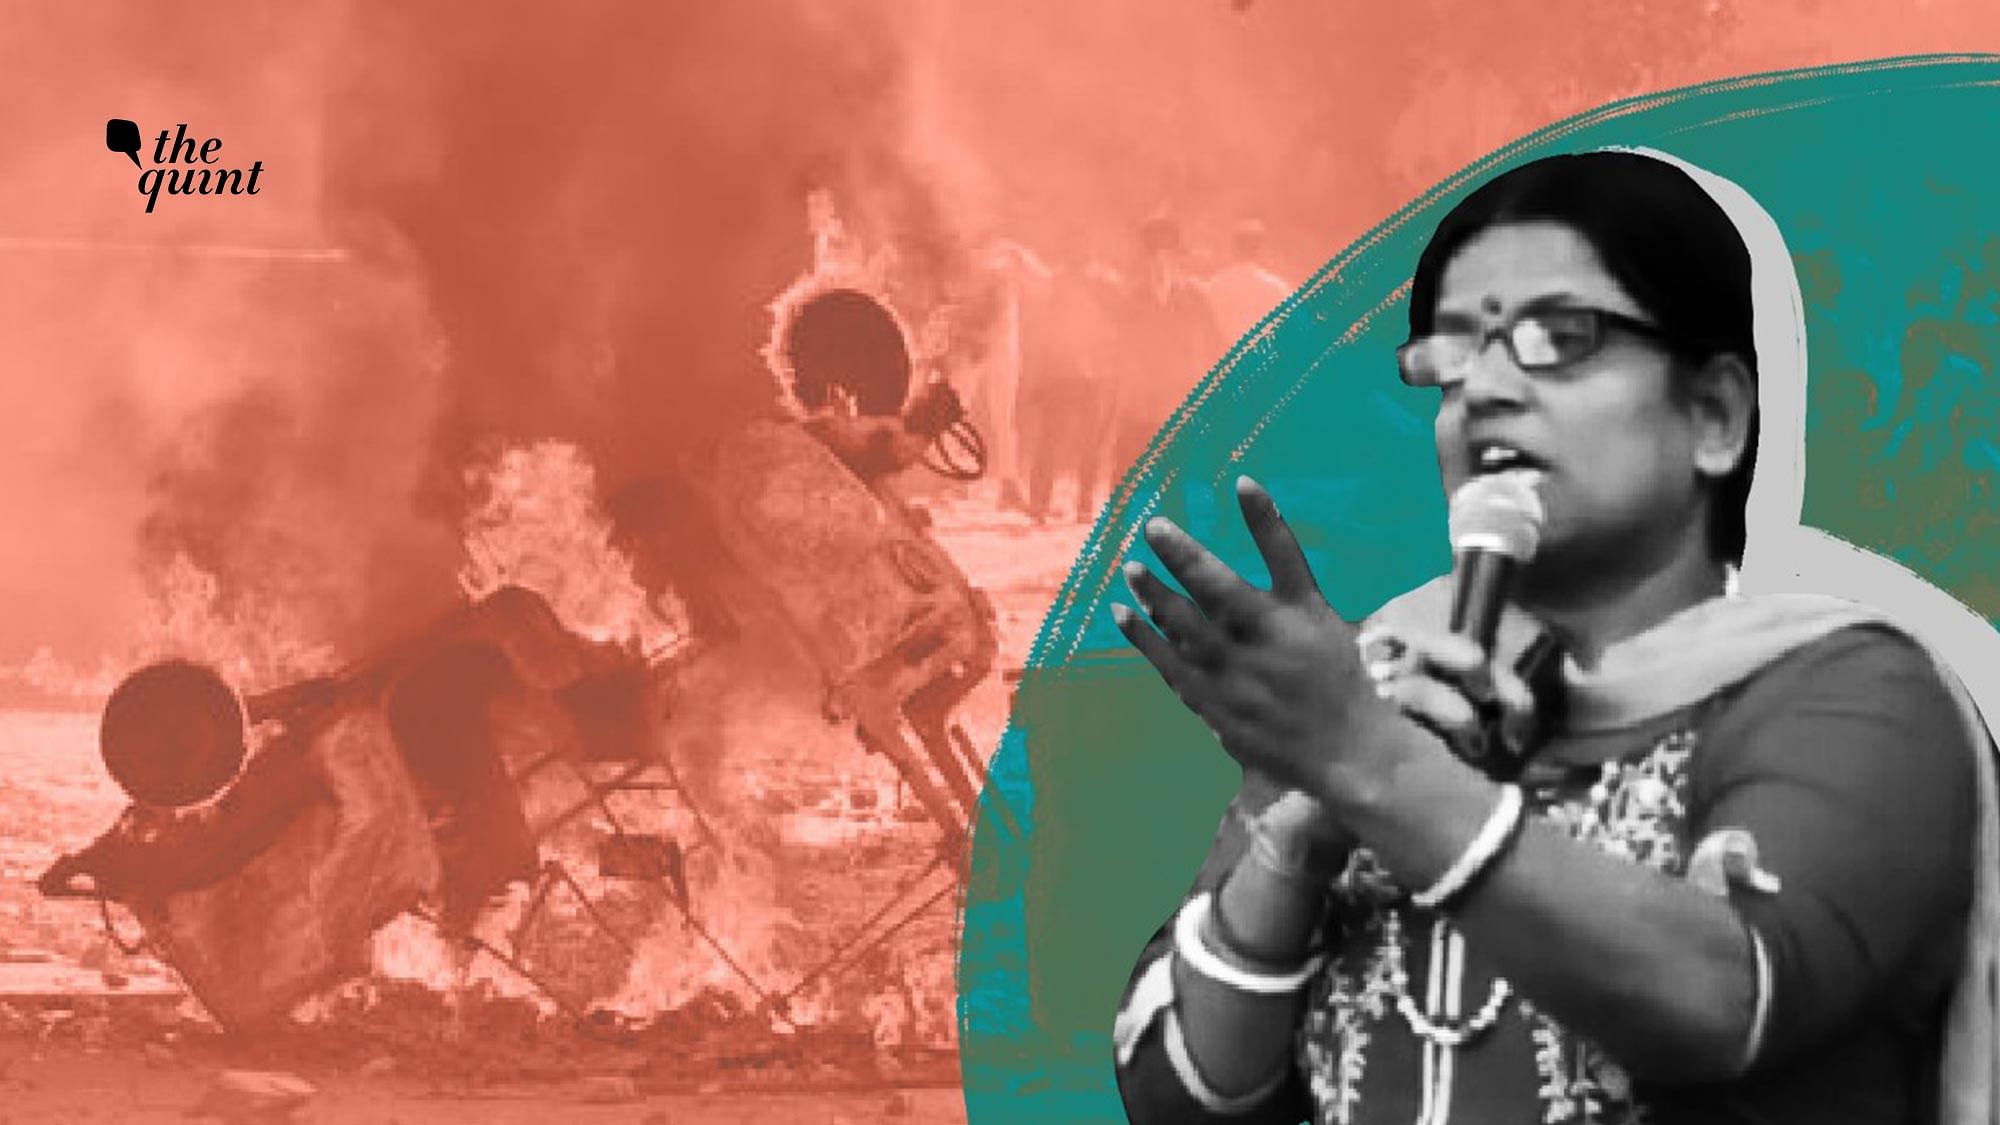 A video of self-styled Hindutva leader Ragini Tiwari saying ‘Kaat Do’ went viral during Delhi riots